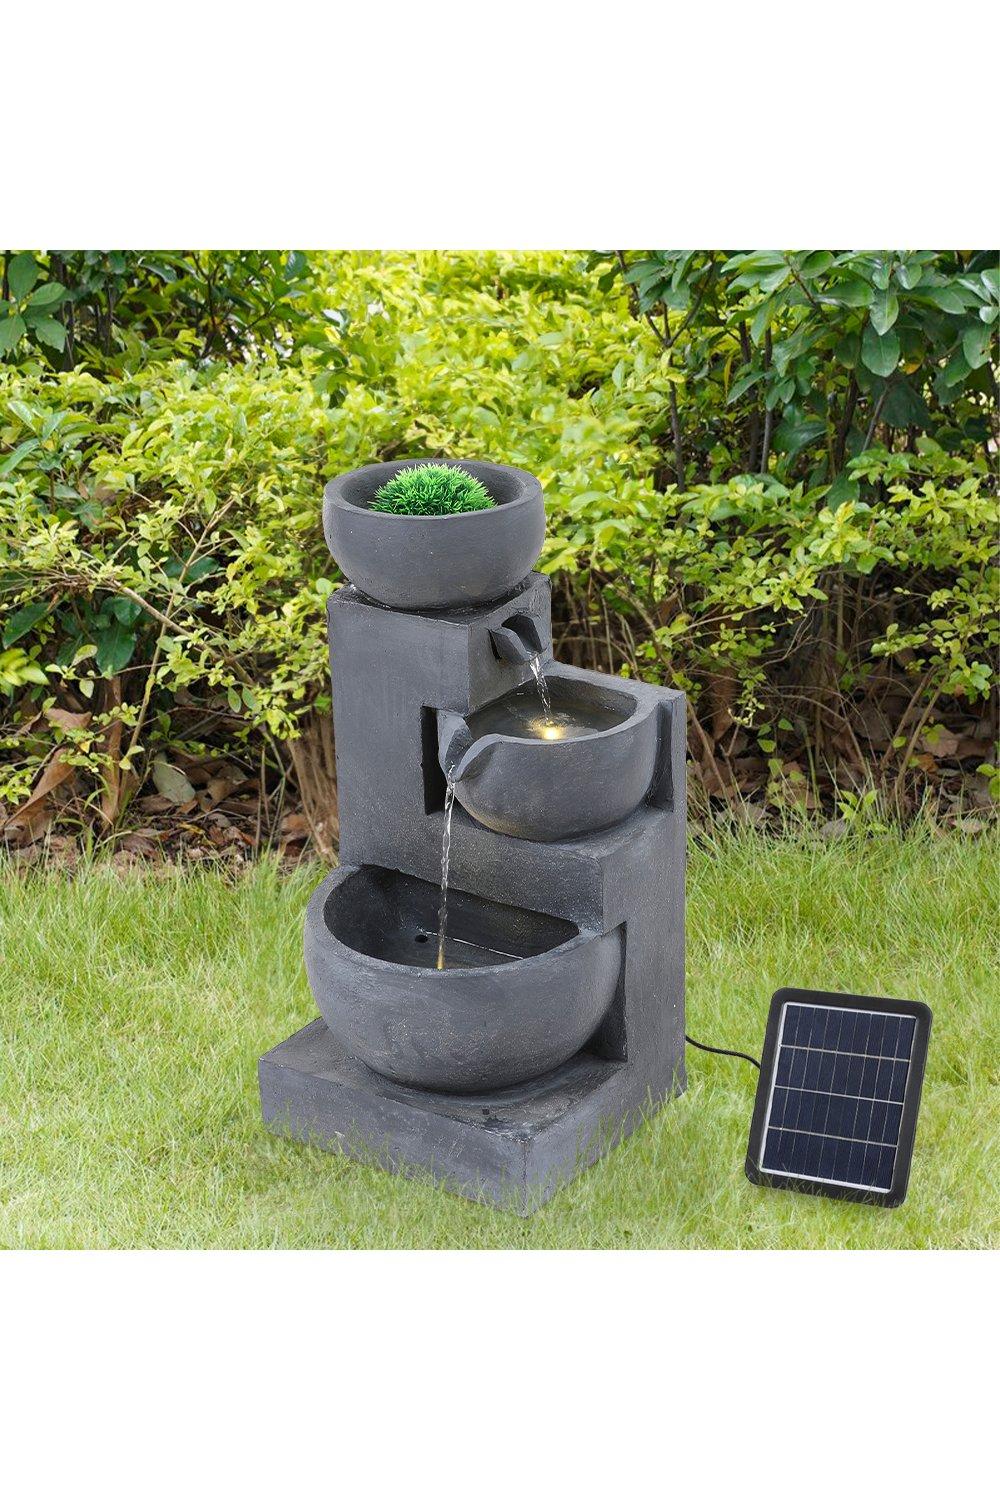 Outdoor Garden Solar Powered Lighted Water Fountain